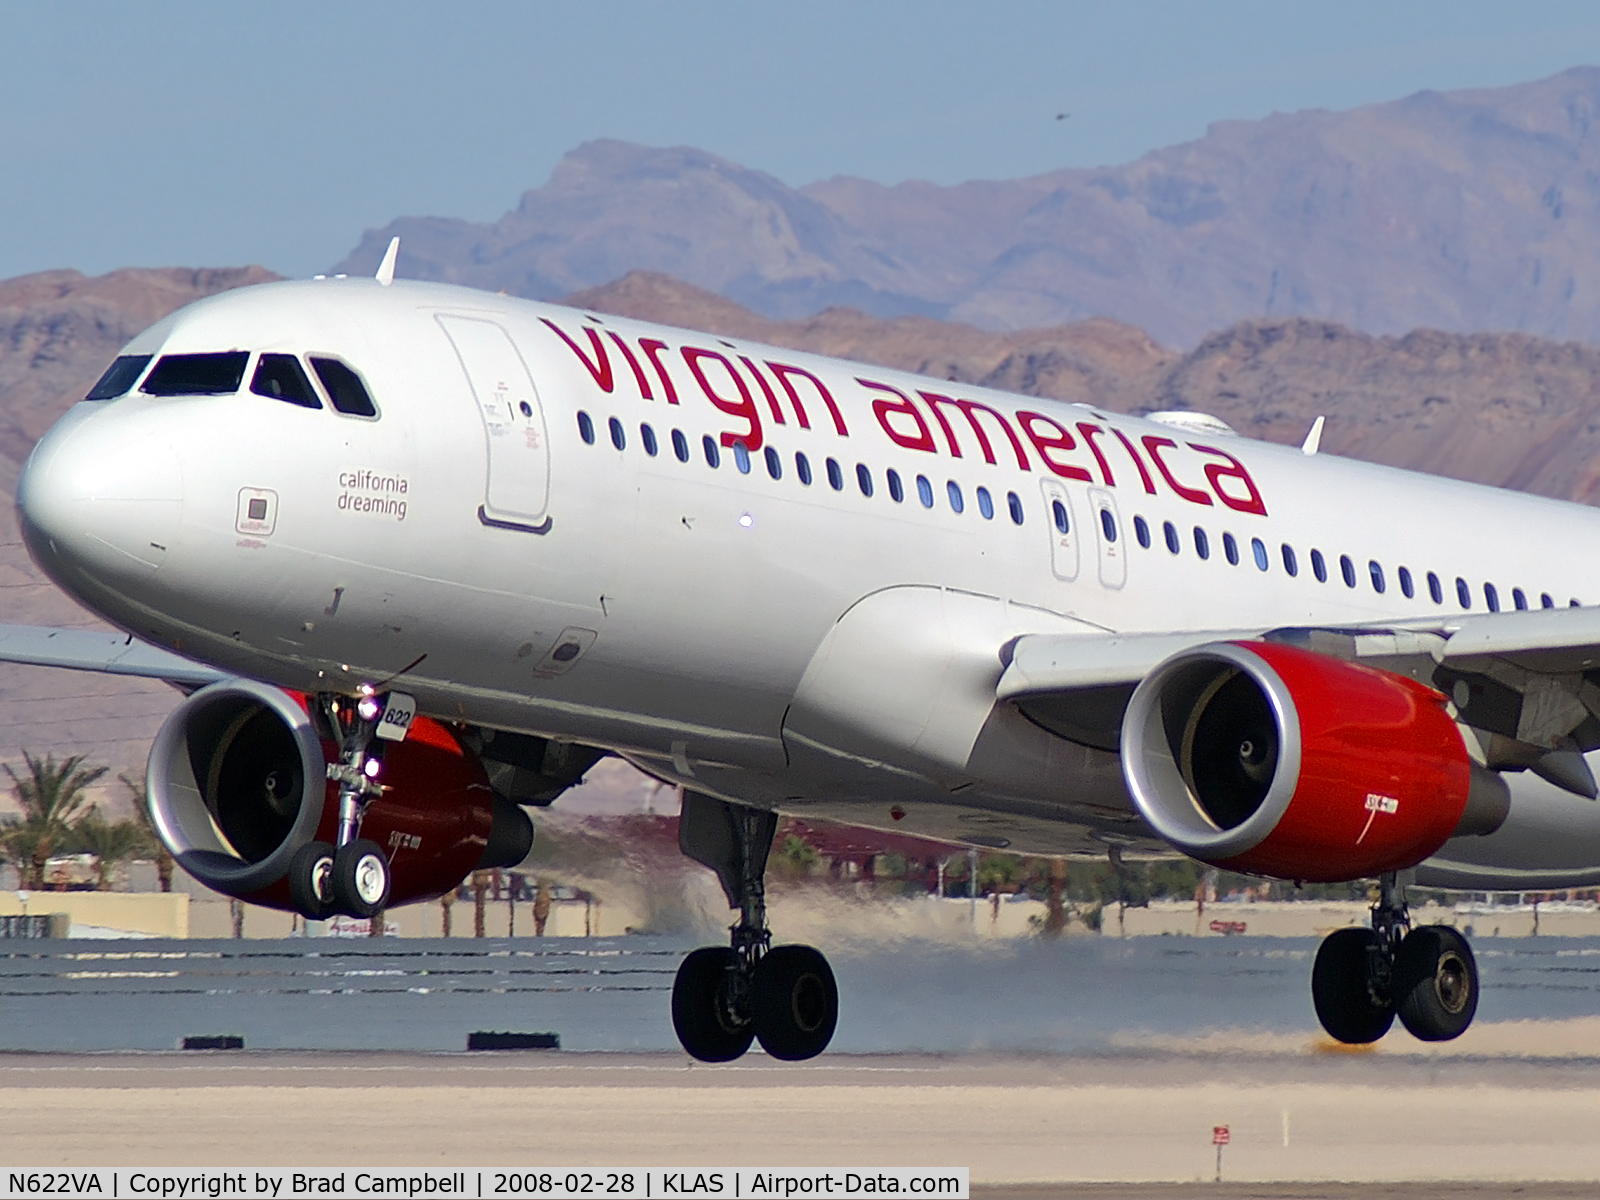 N622VA, 2006 Airbus A320-214 C/N 2674, Virgin America - 'California Dreaming' / 2006 Airbus A320-214